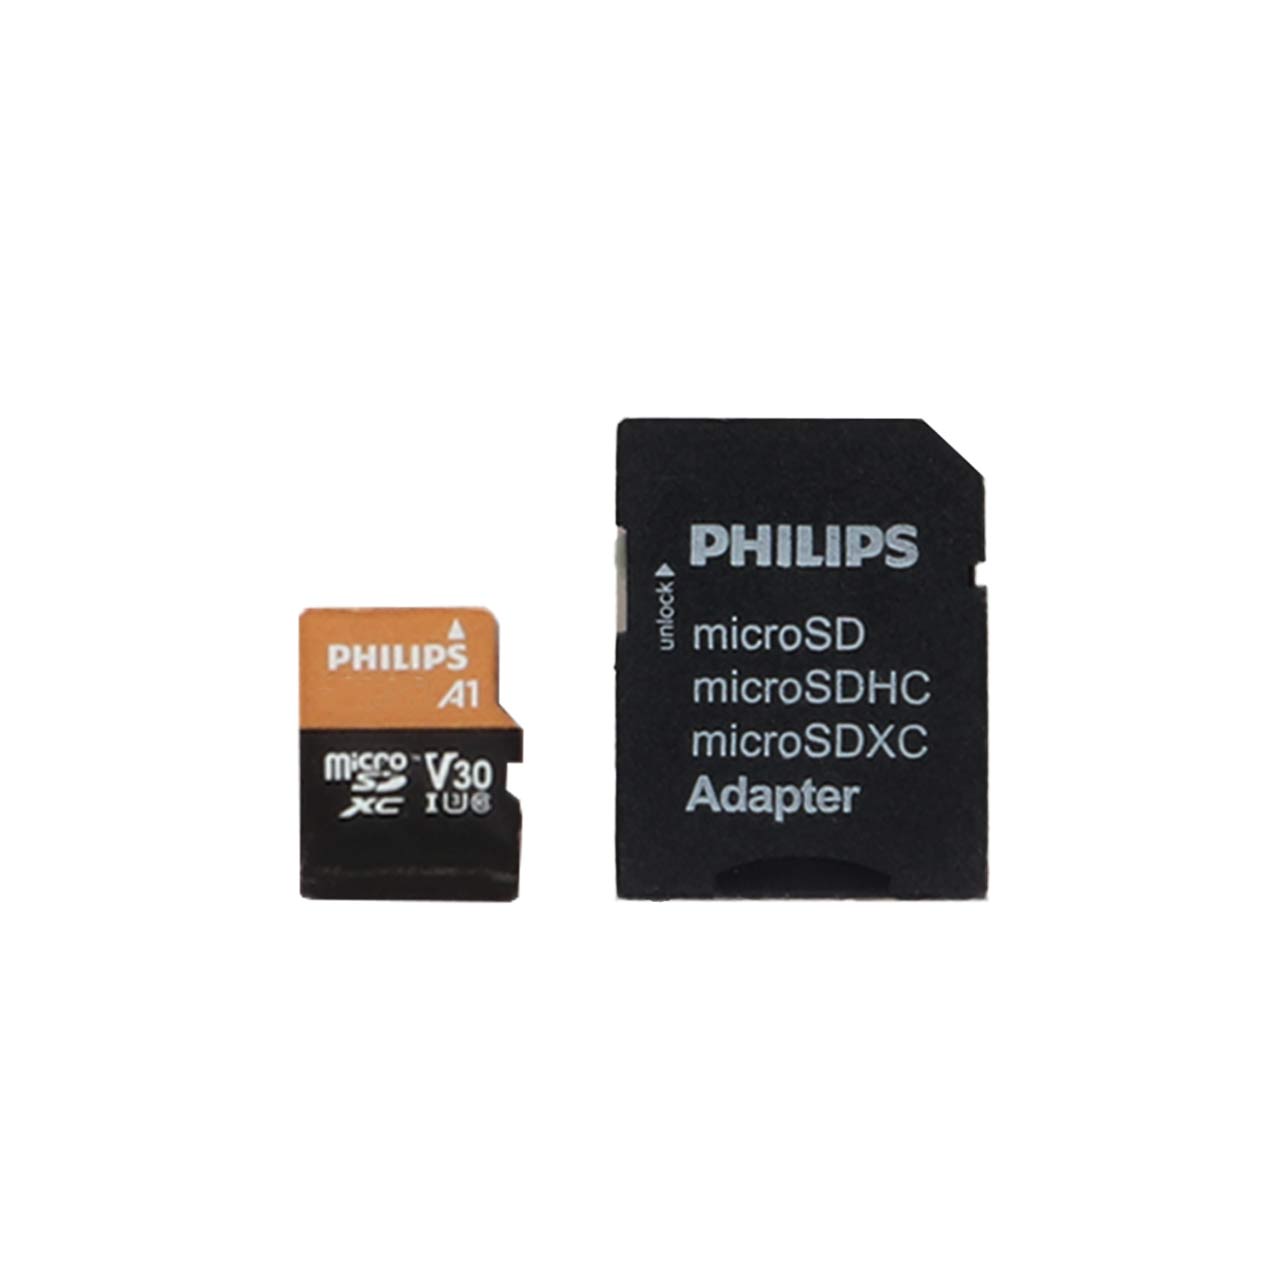 PHILIPS microSDHC & adapter UHS-I Ultra Pro U3 Class 10 V30 A1 - 100MB/s - 128GB